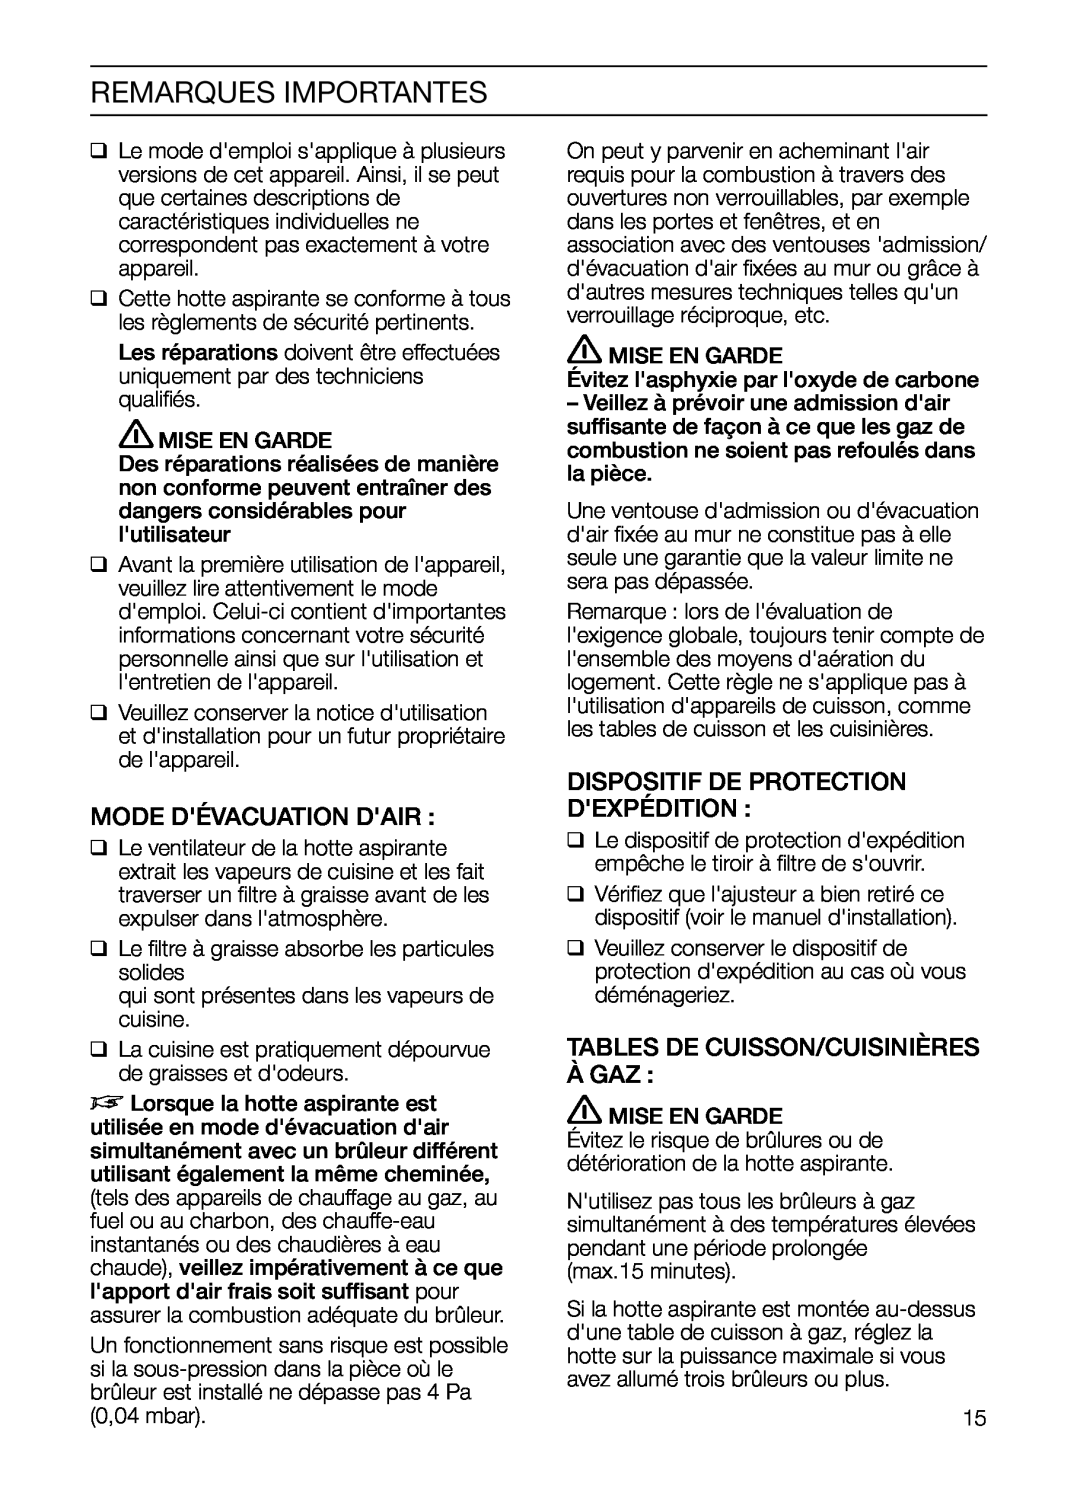 Thermador HGEW36FS manual Remarques Importantes, Mode Dévacuation Dair, Dispositif De Protection Dexpédition 